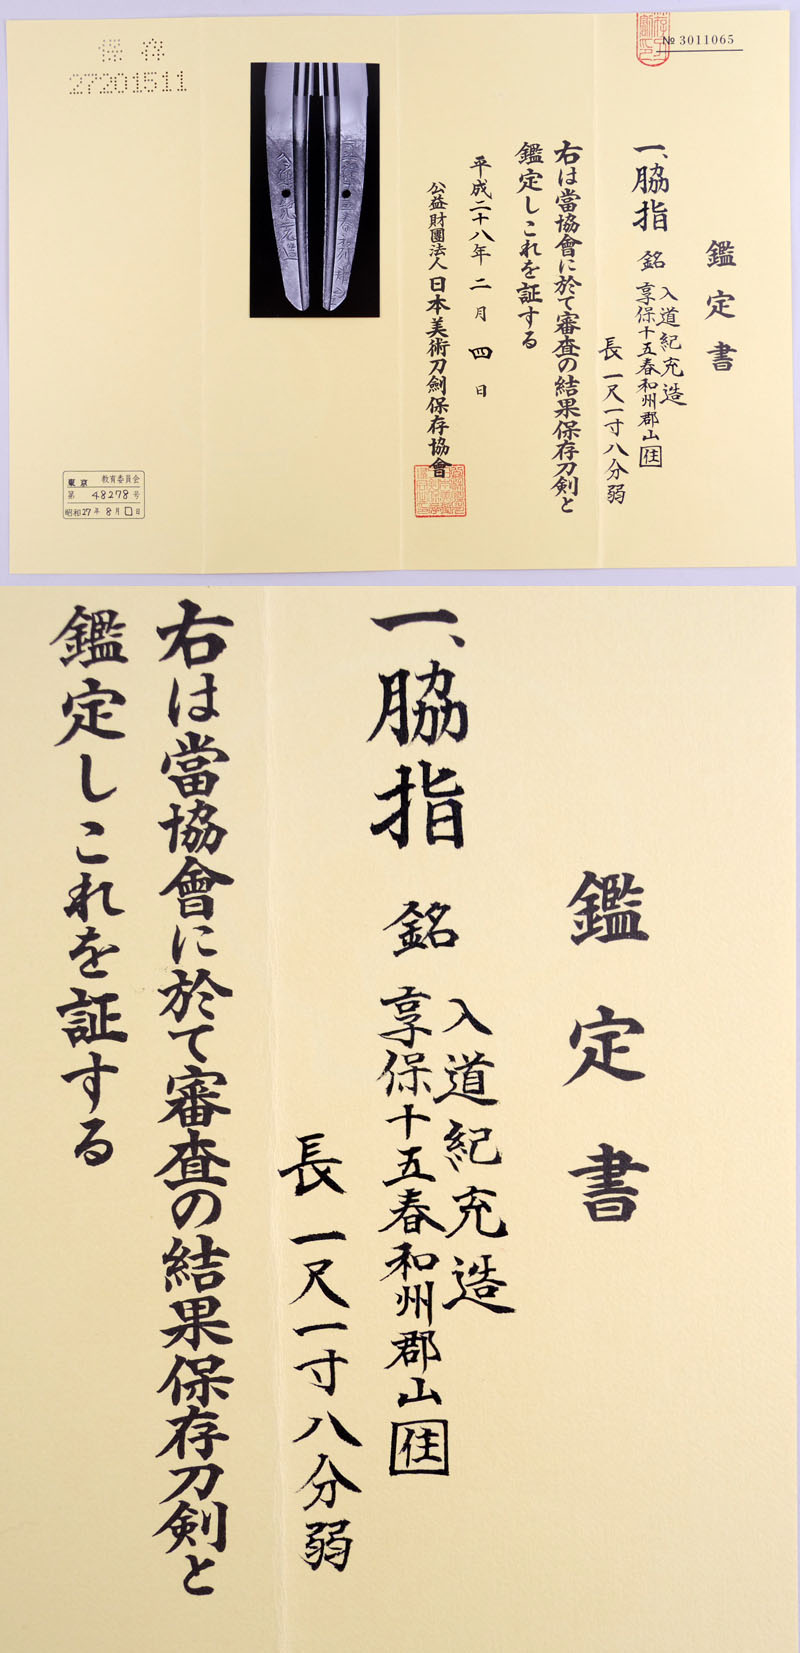 入道紀充造 (筒井紀充) Picture of Certificate